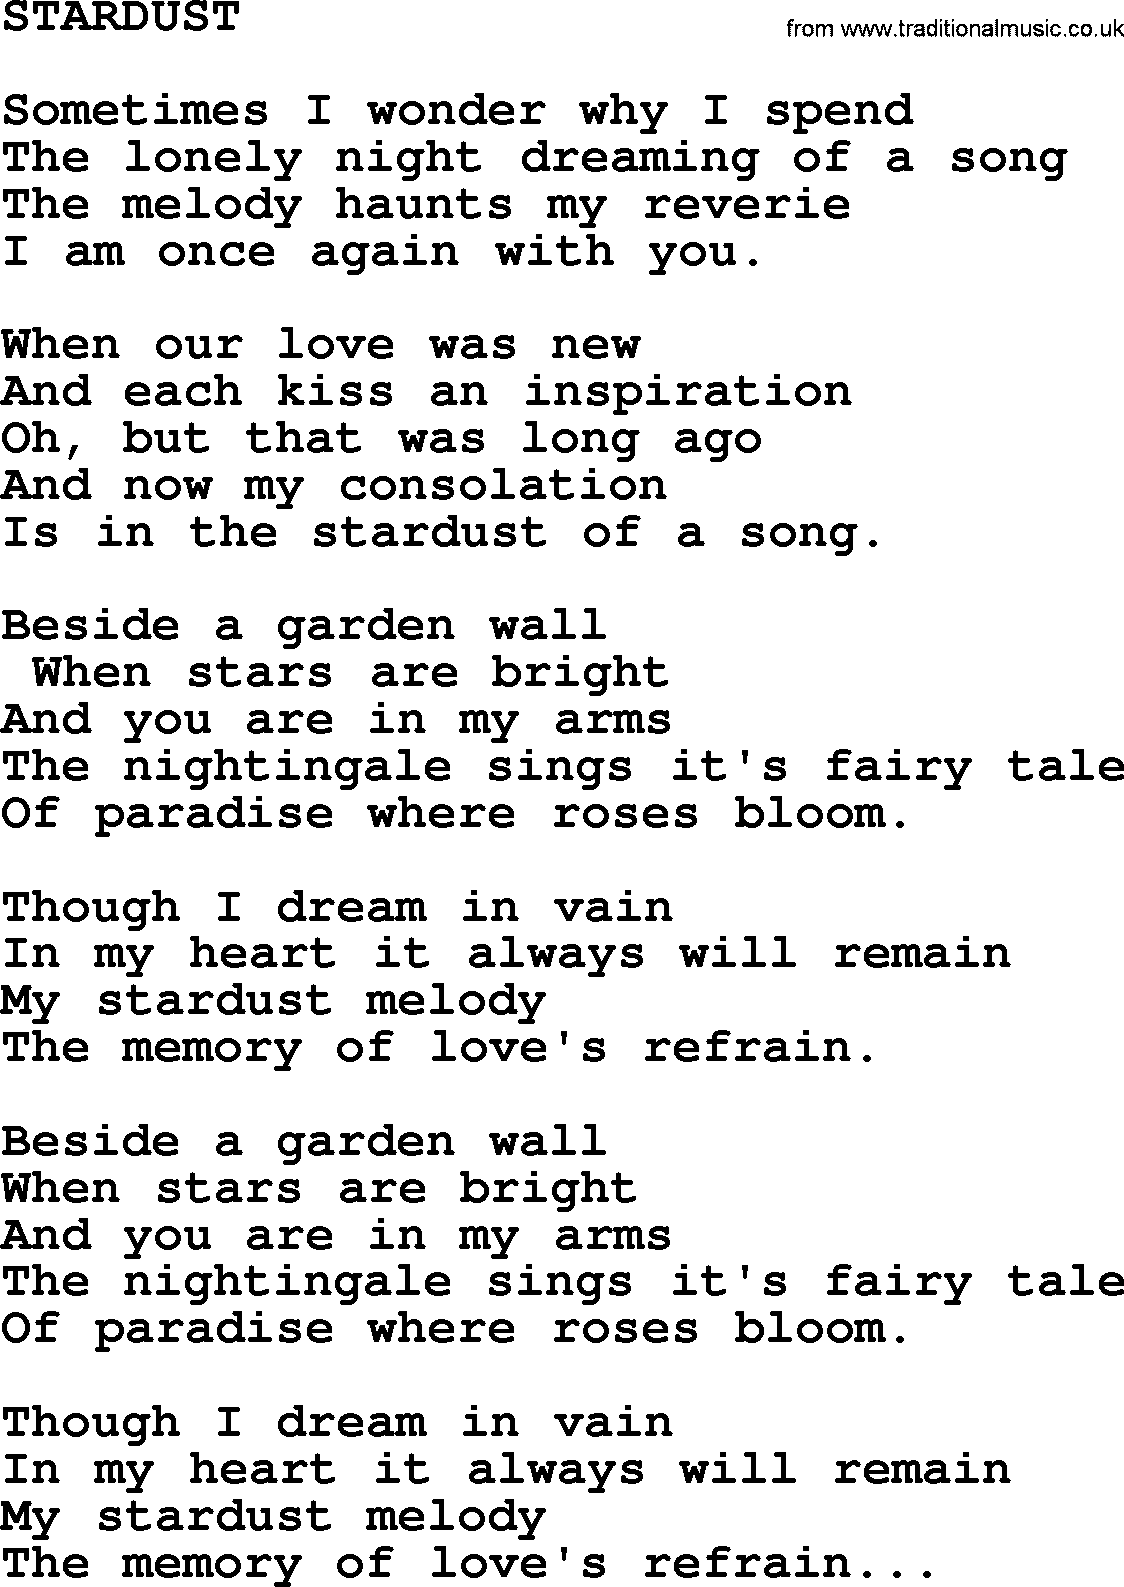 Merle Haggard song: Stardust, lyrics.